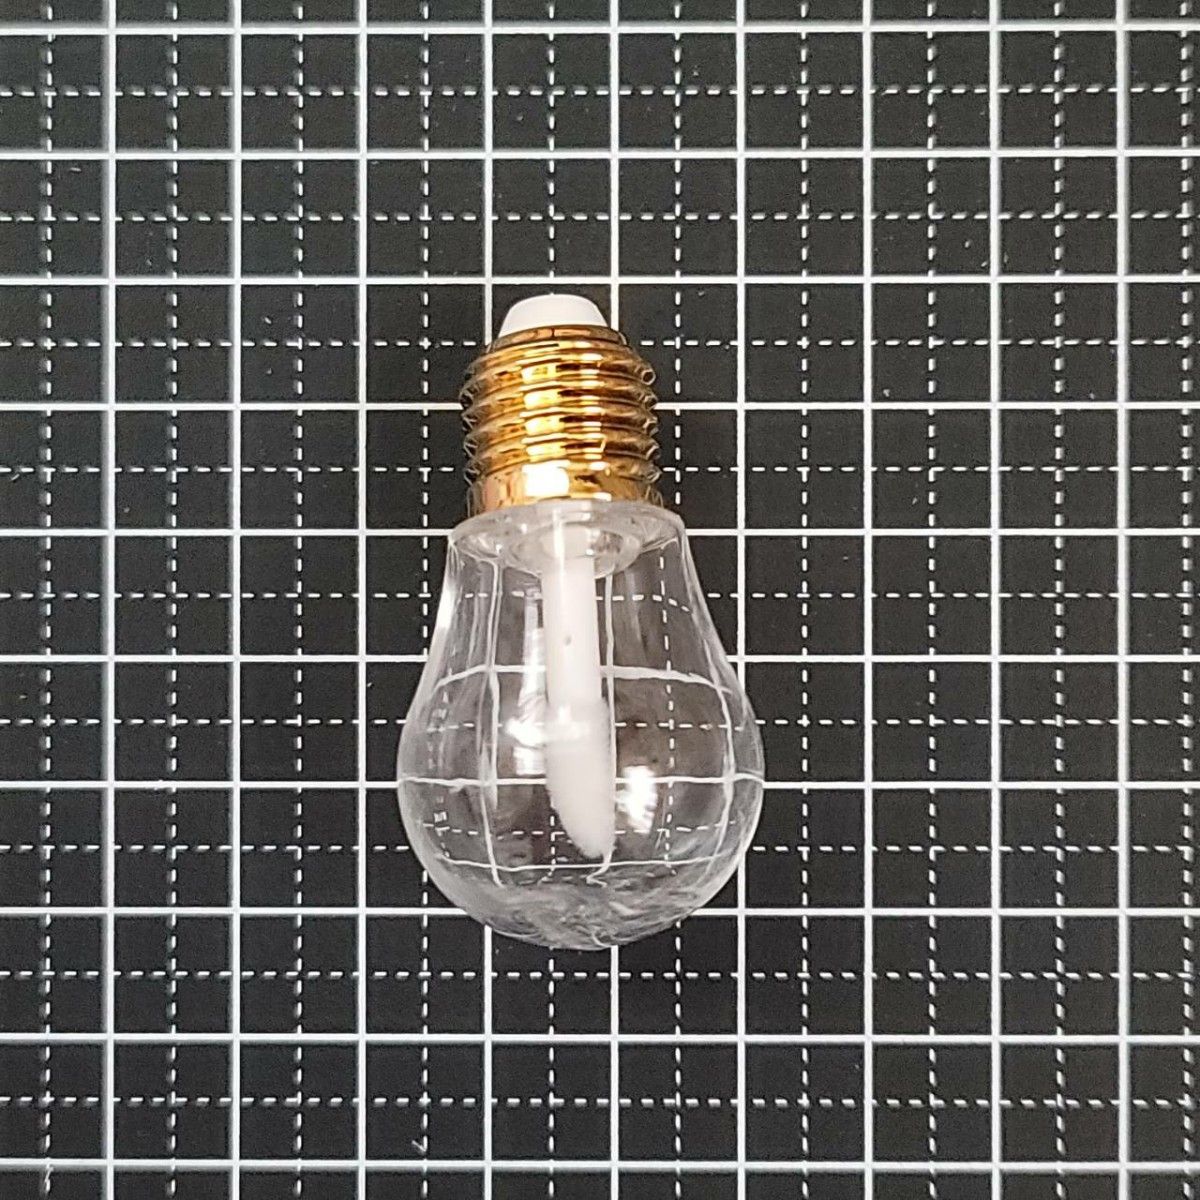 LED 電球型 リップグロス 空容器 アトマイザー アンティーク